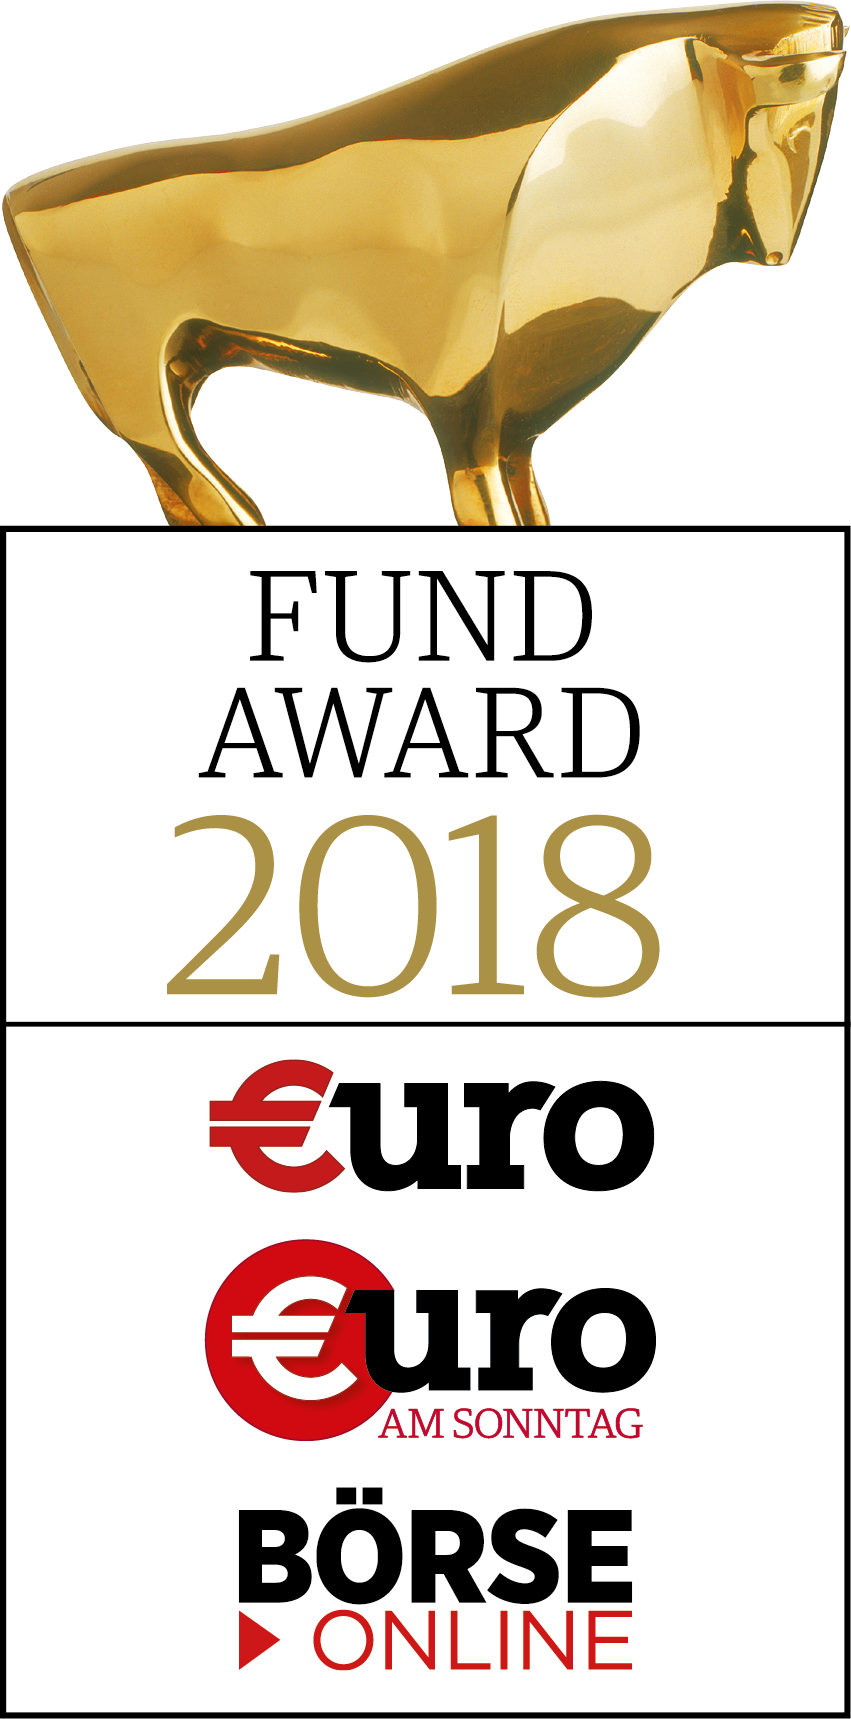 FundAward 2018